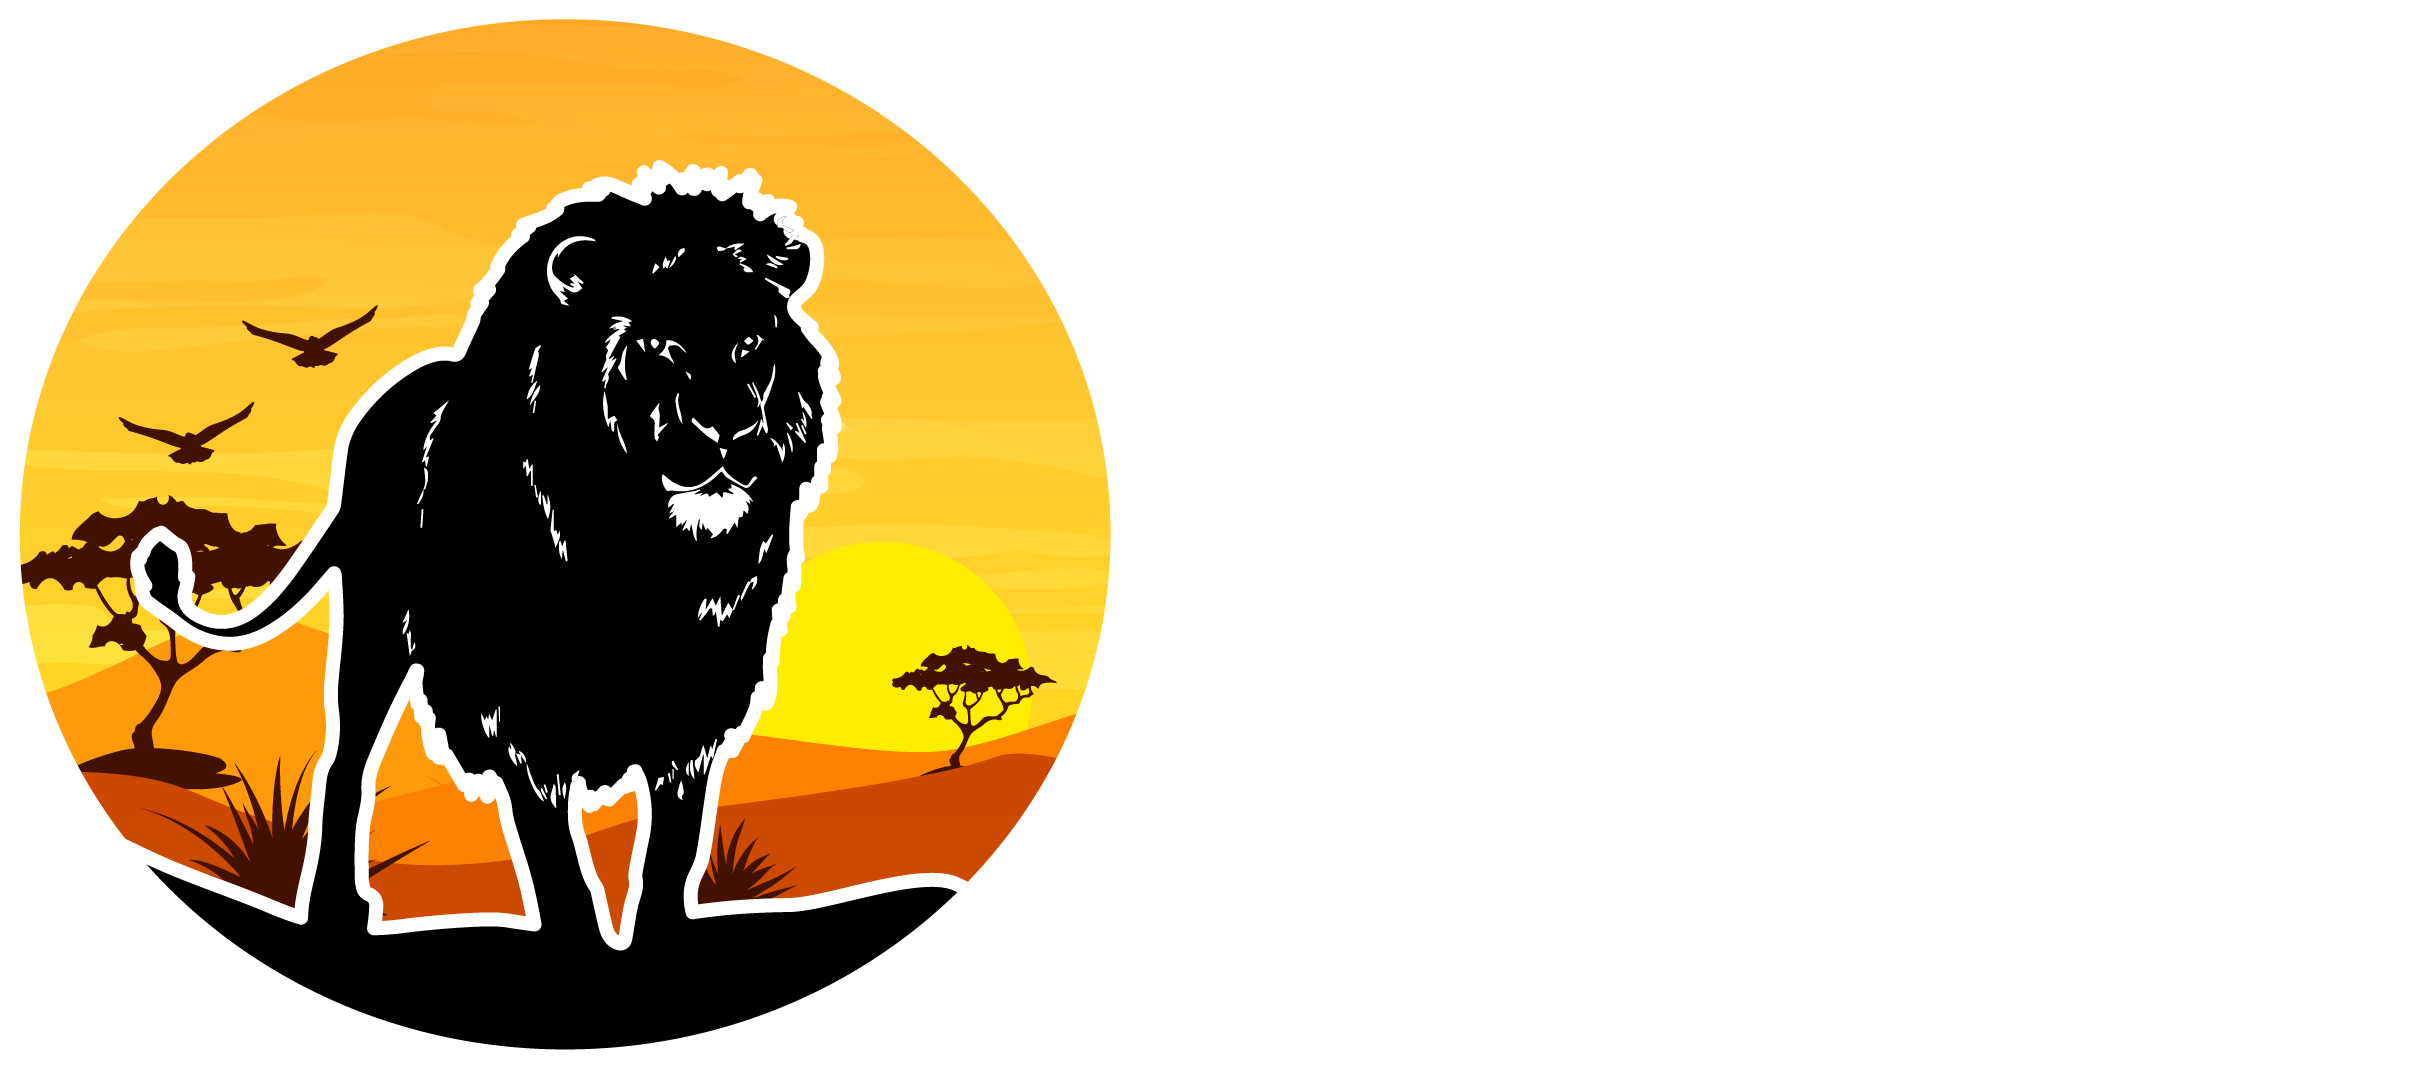 Deks Safaris & Tours